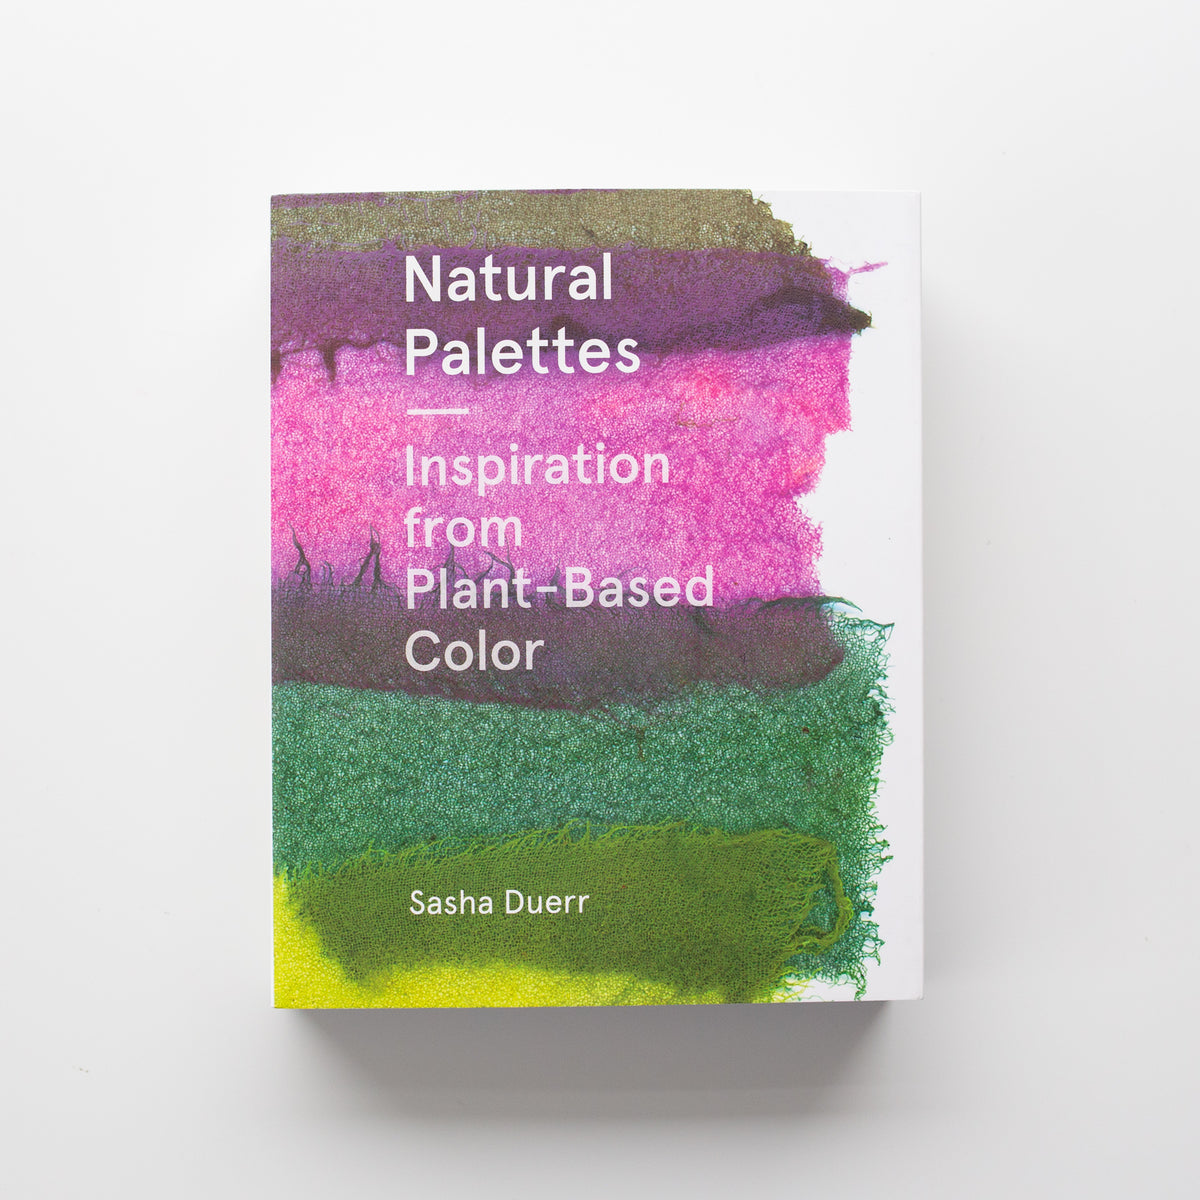 Natural palettes by Sasha Duerr